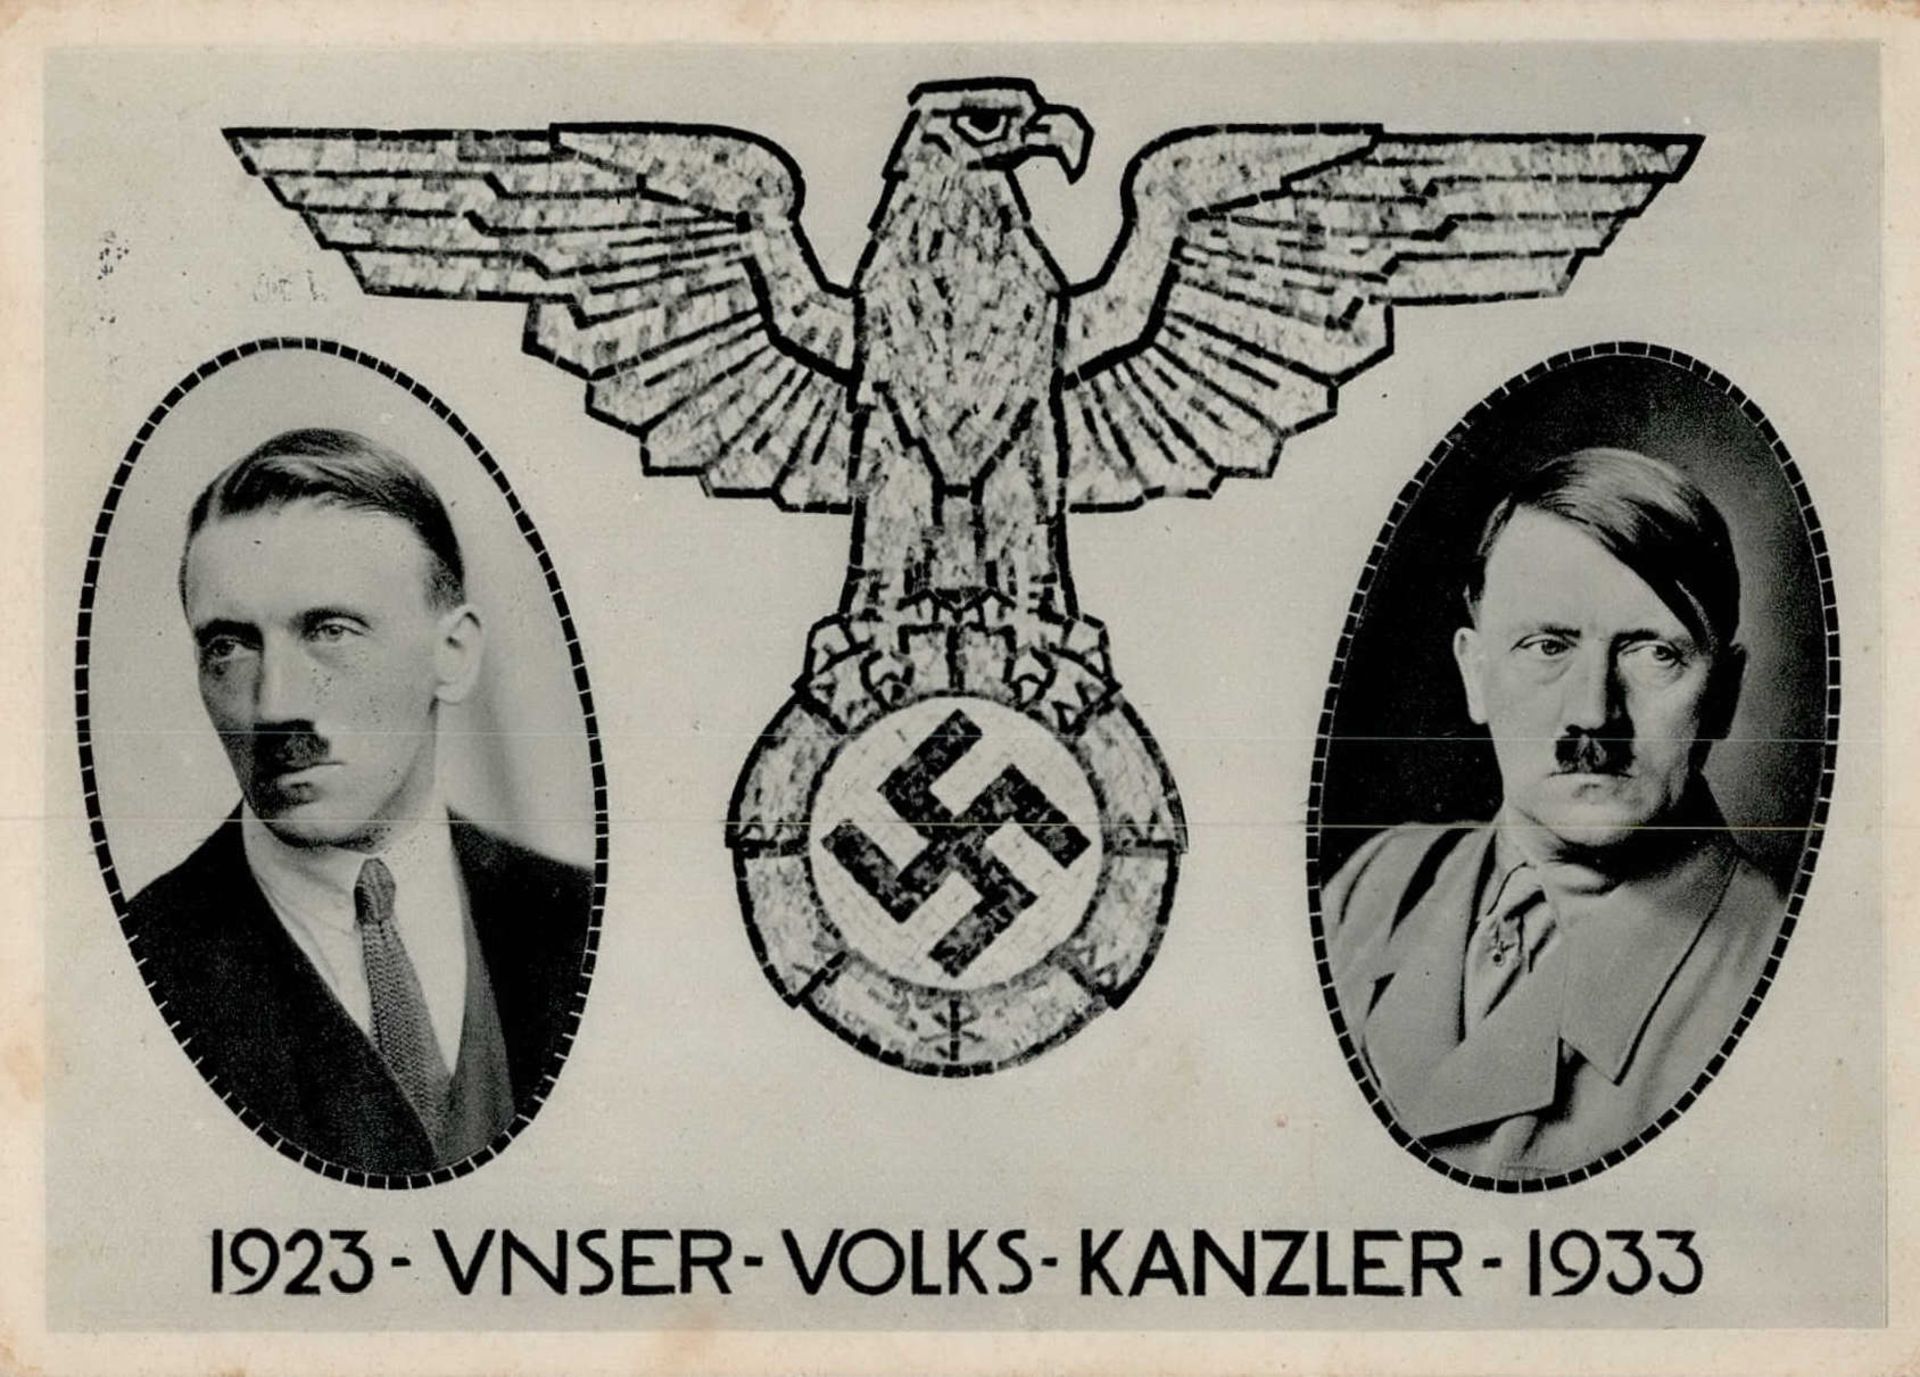 HITLER WK II - 10jährige Erinnerungs-Propagandakarte UNSER VOLKS-KANZLER 1923-1933 PH 499 S-o RP